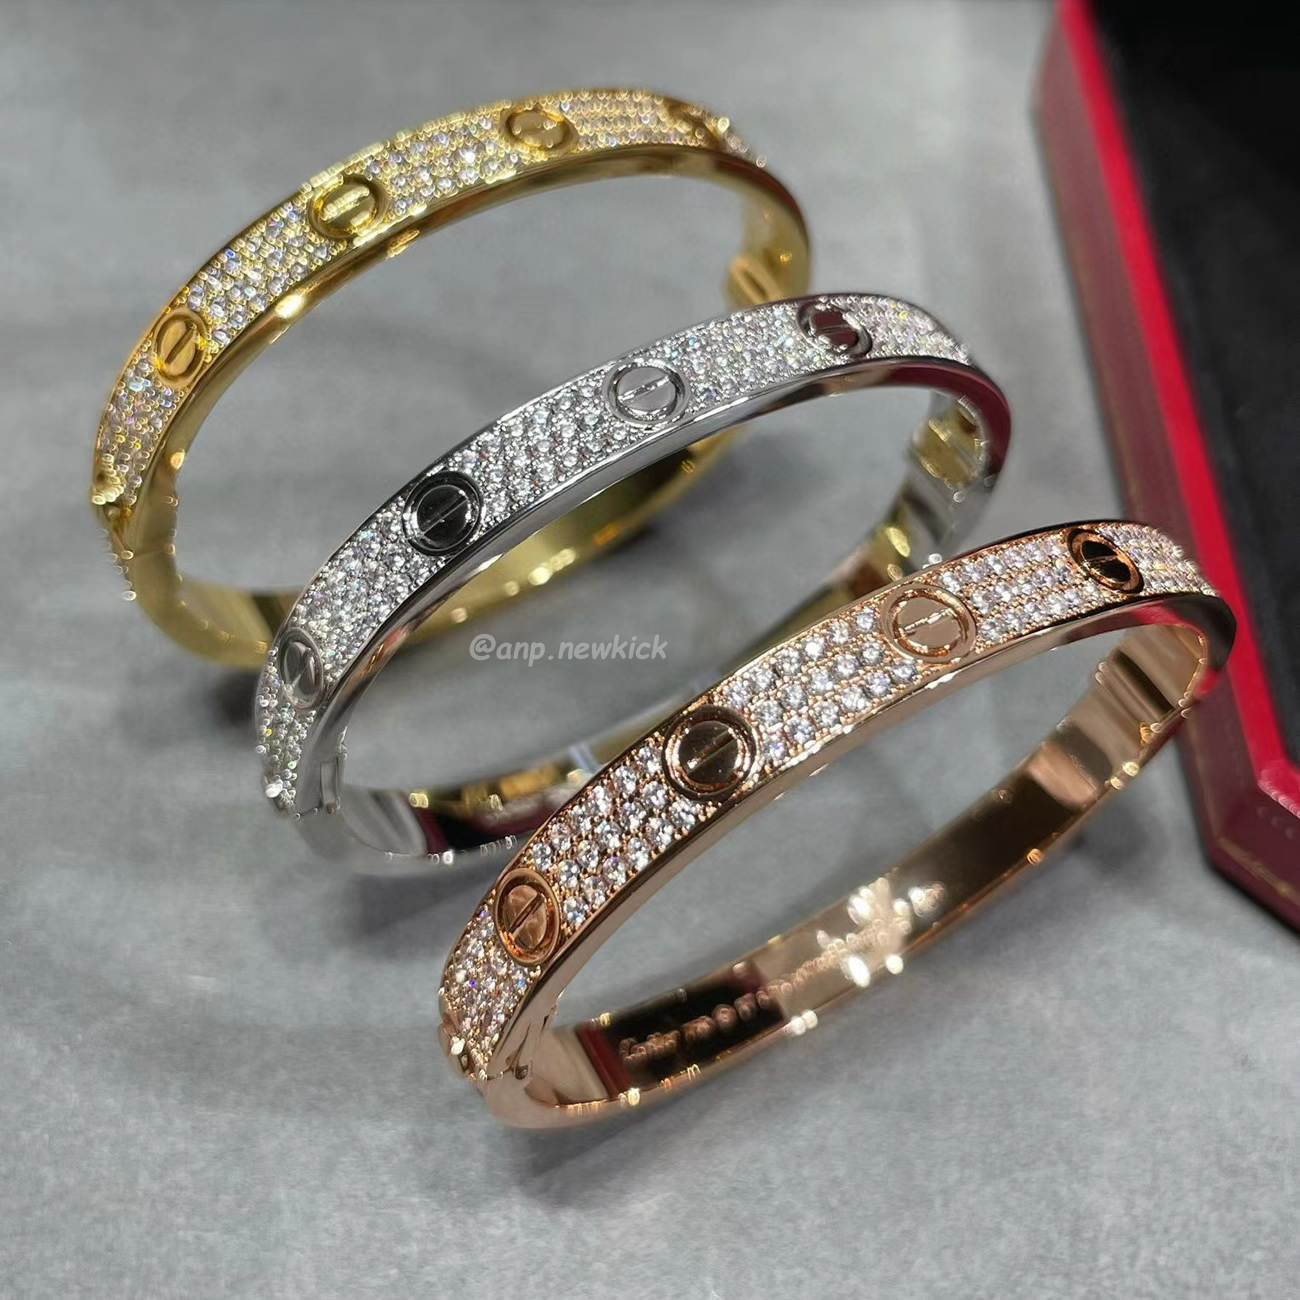 Cartier Bracelet Wide Version Full Sky Star Gold Rose Gold Platinum (1) - newkick.org